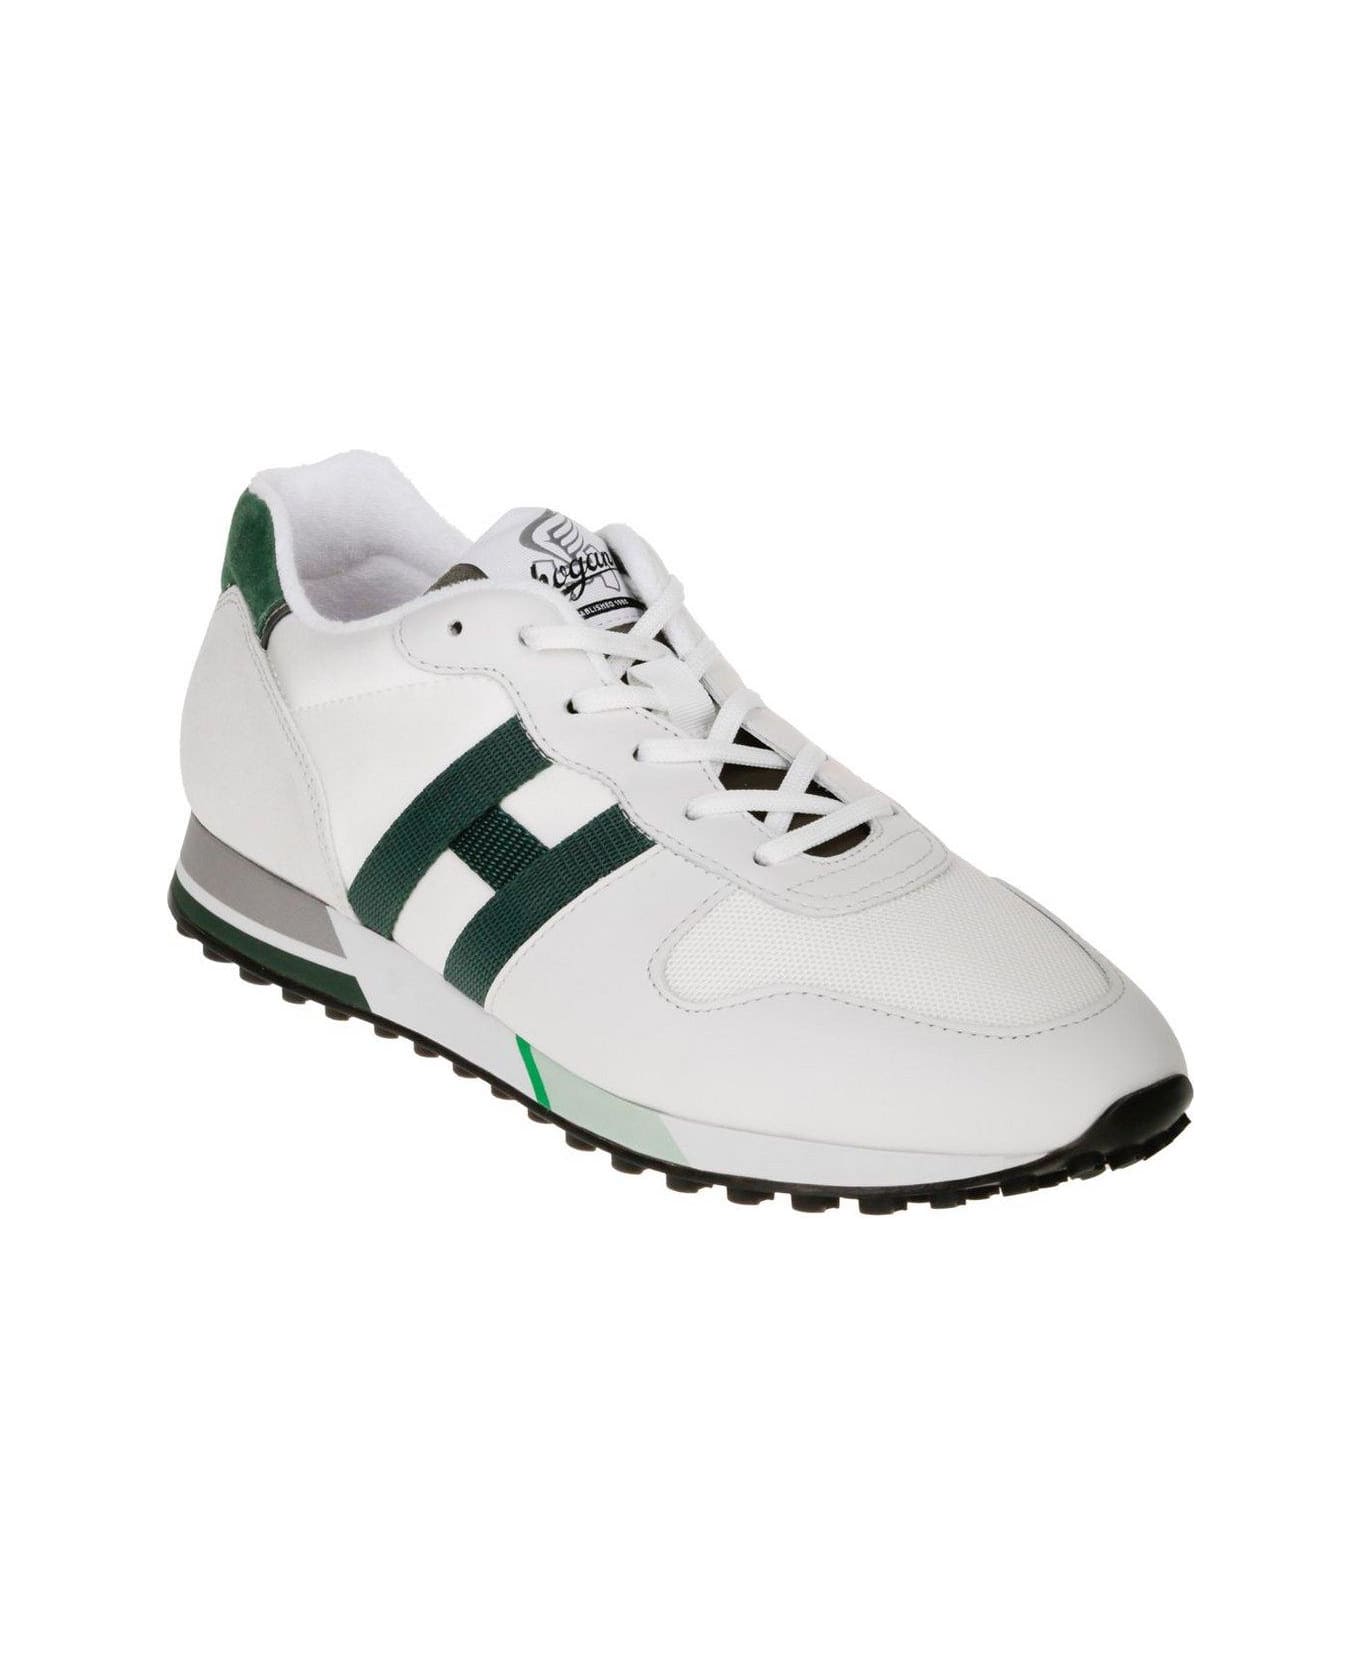 Hogan H383 Sneakers - White